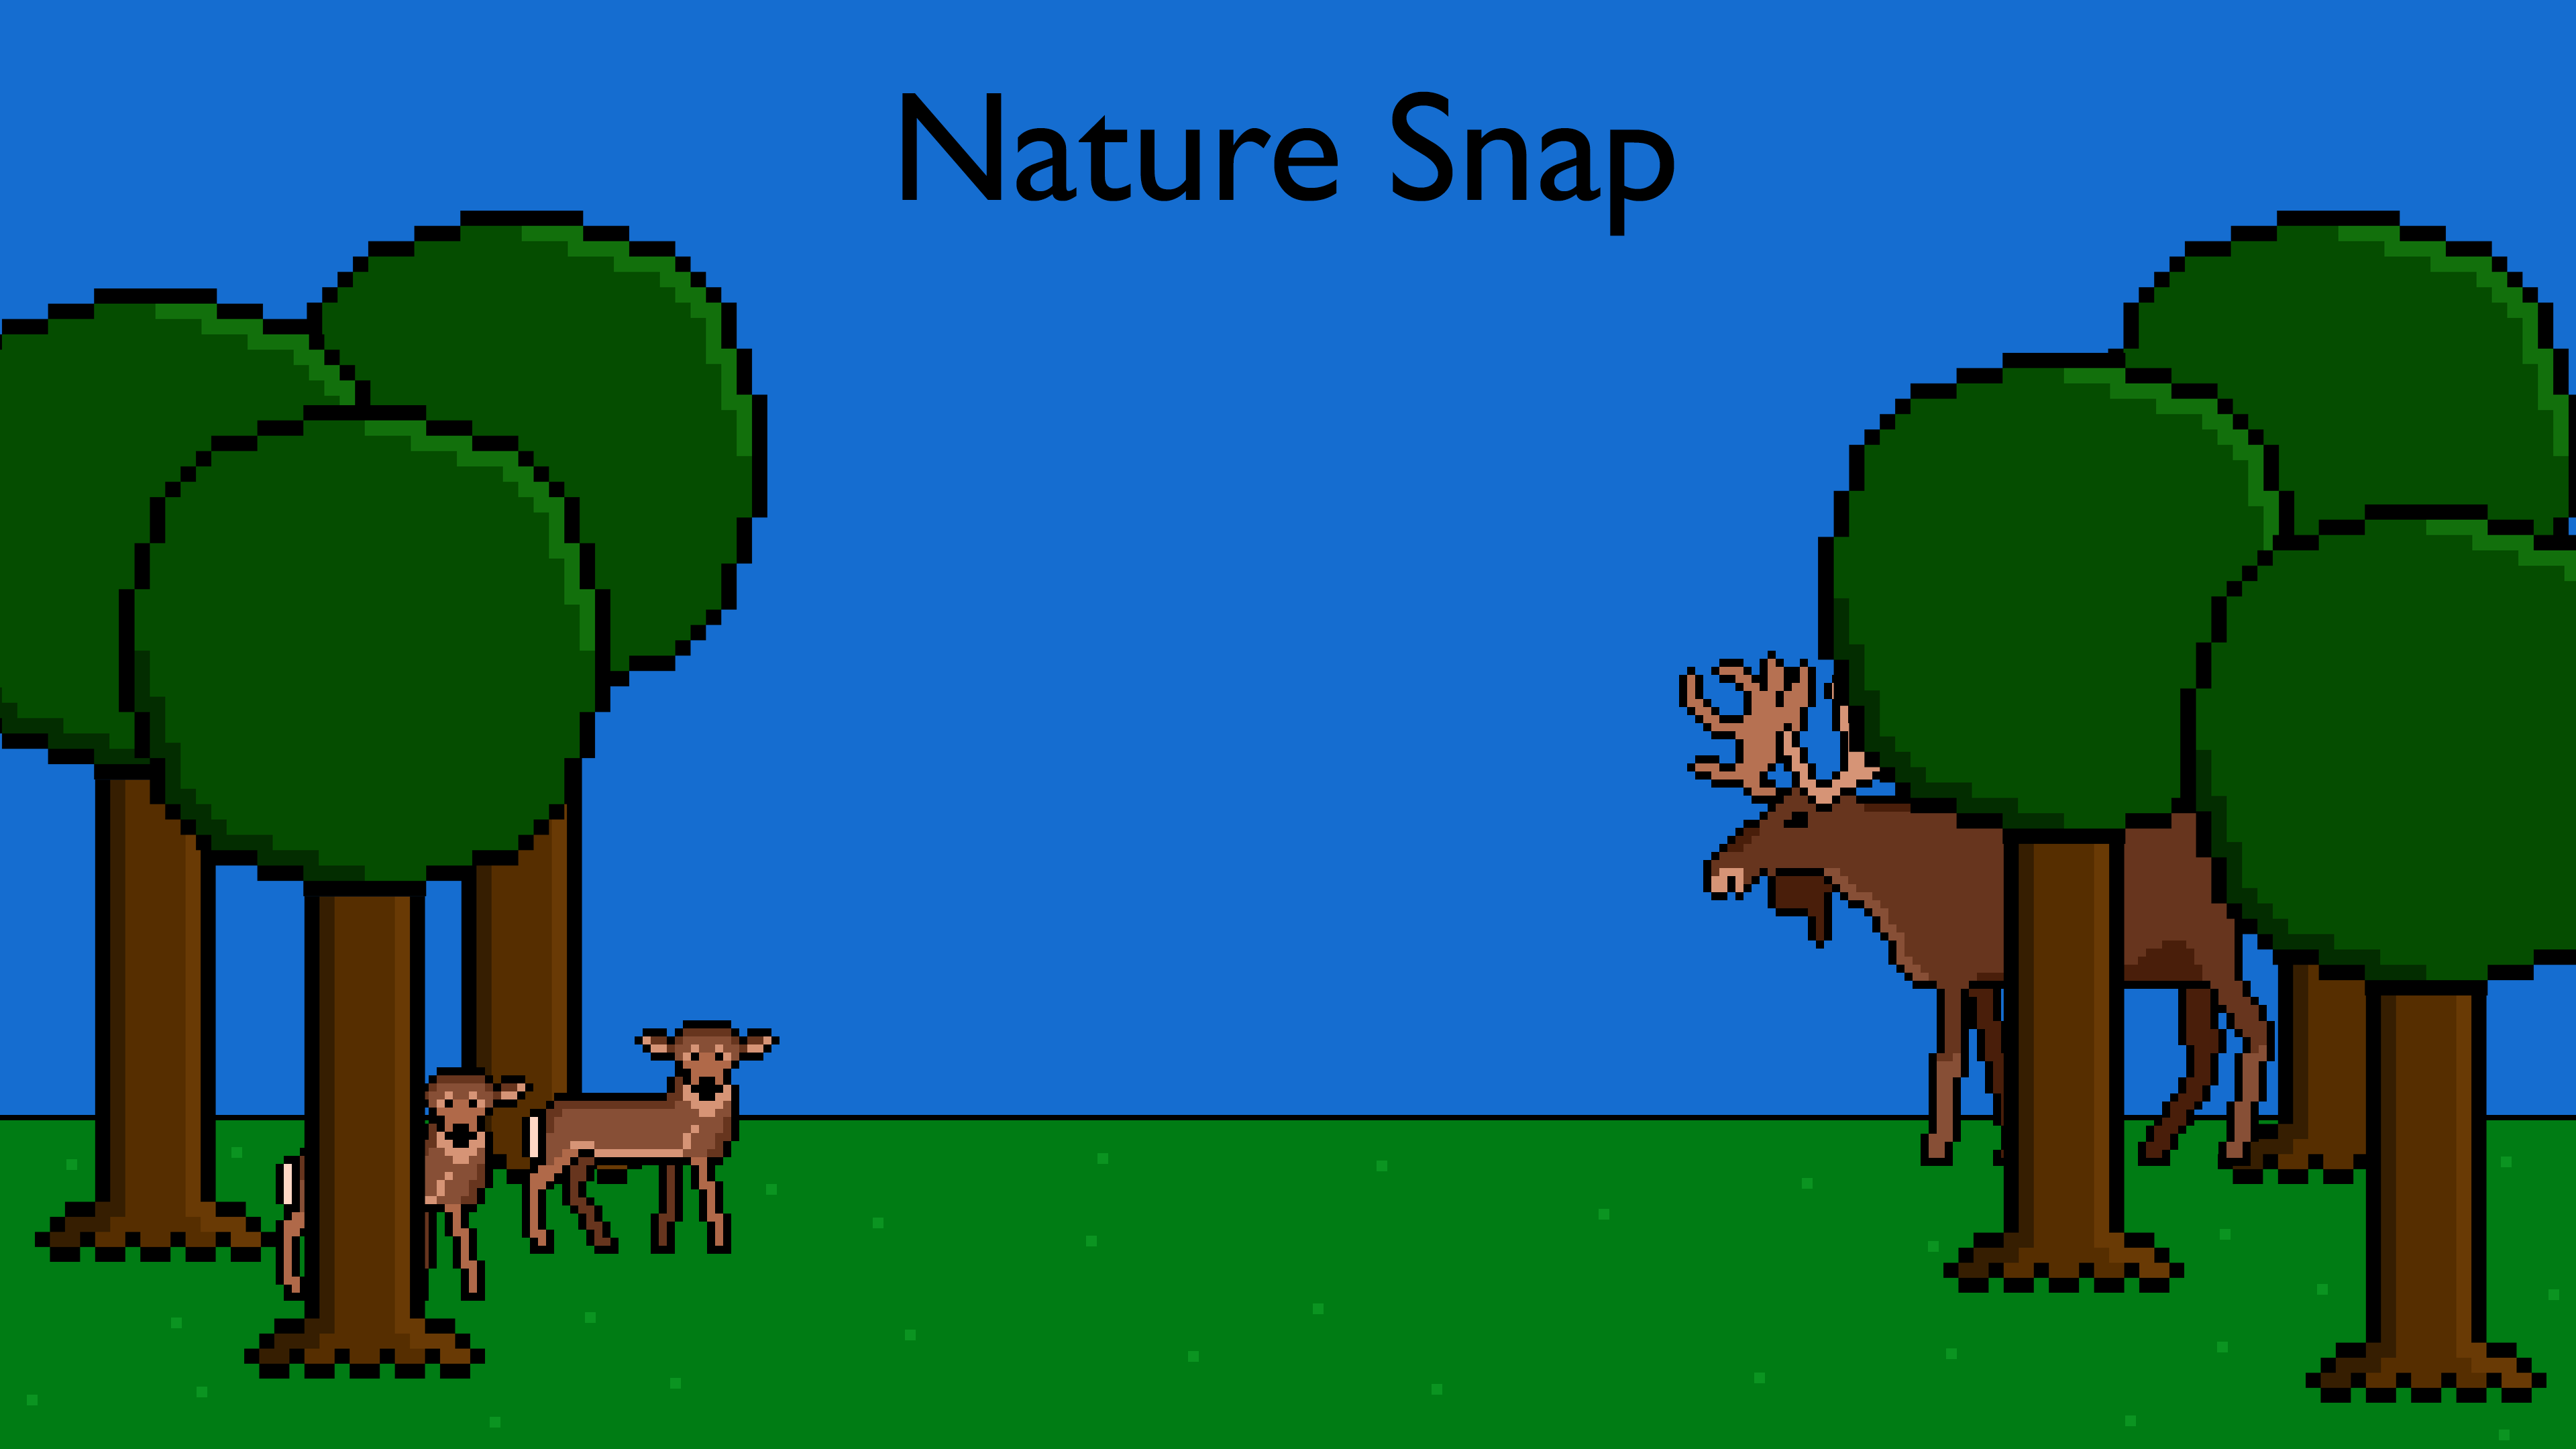 Nature Snap